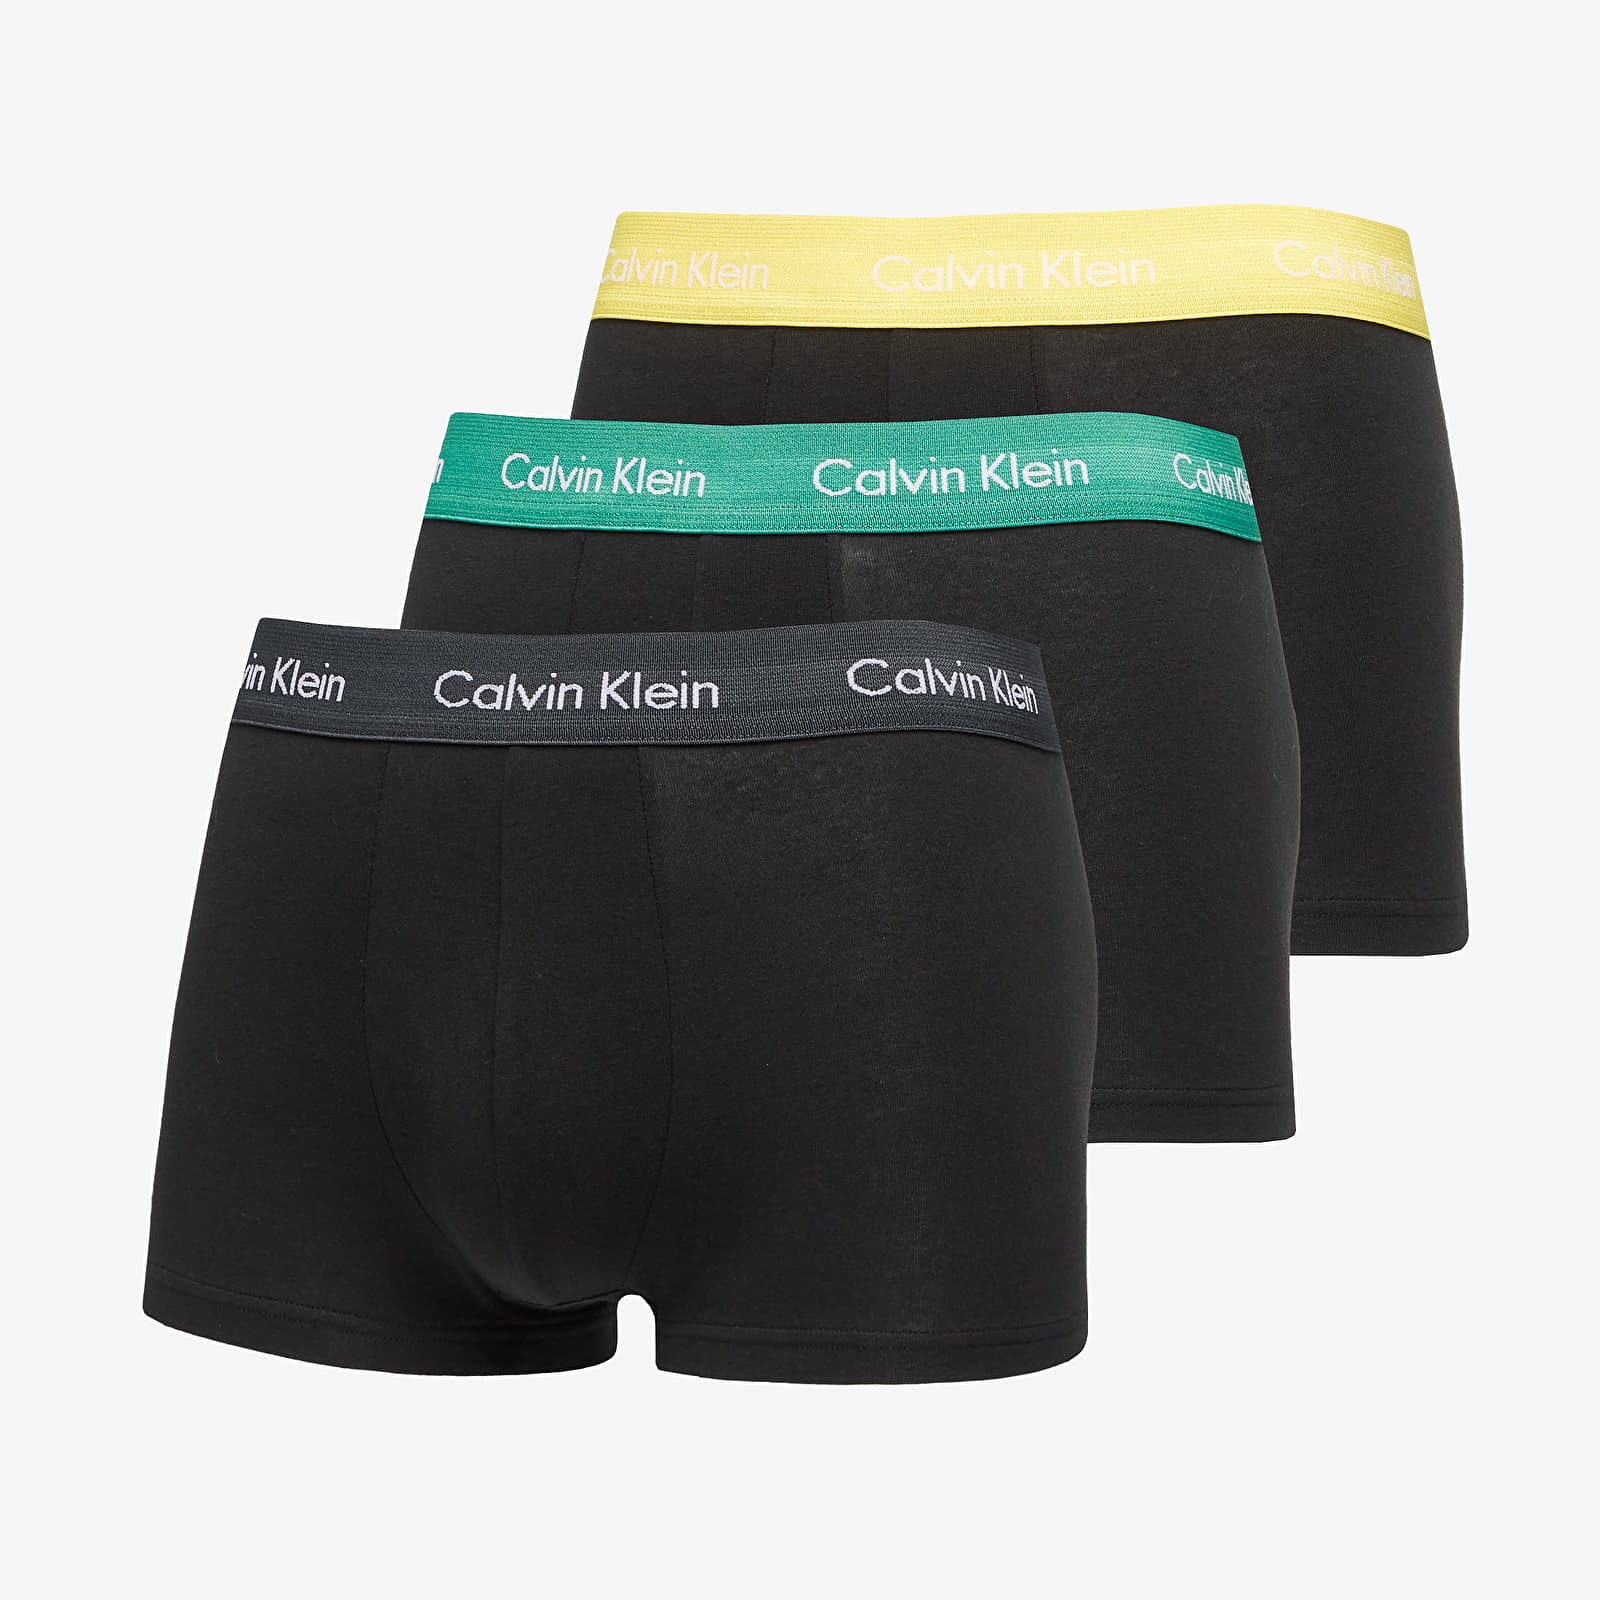 Boxer shorts Calvin Klein Cotton Stretch Low Rise Trunk 3 Pack Black/ Black Heather/ Yellow/ Green